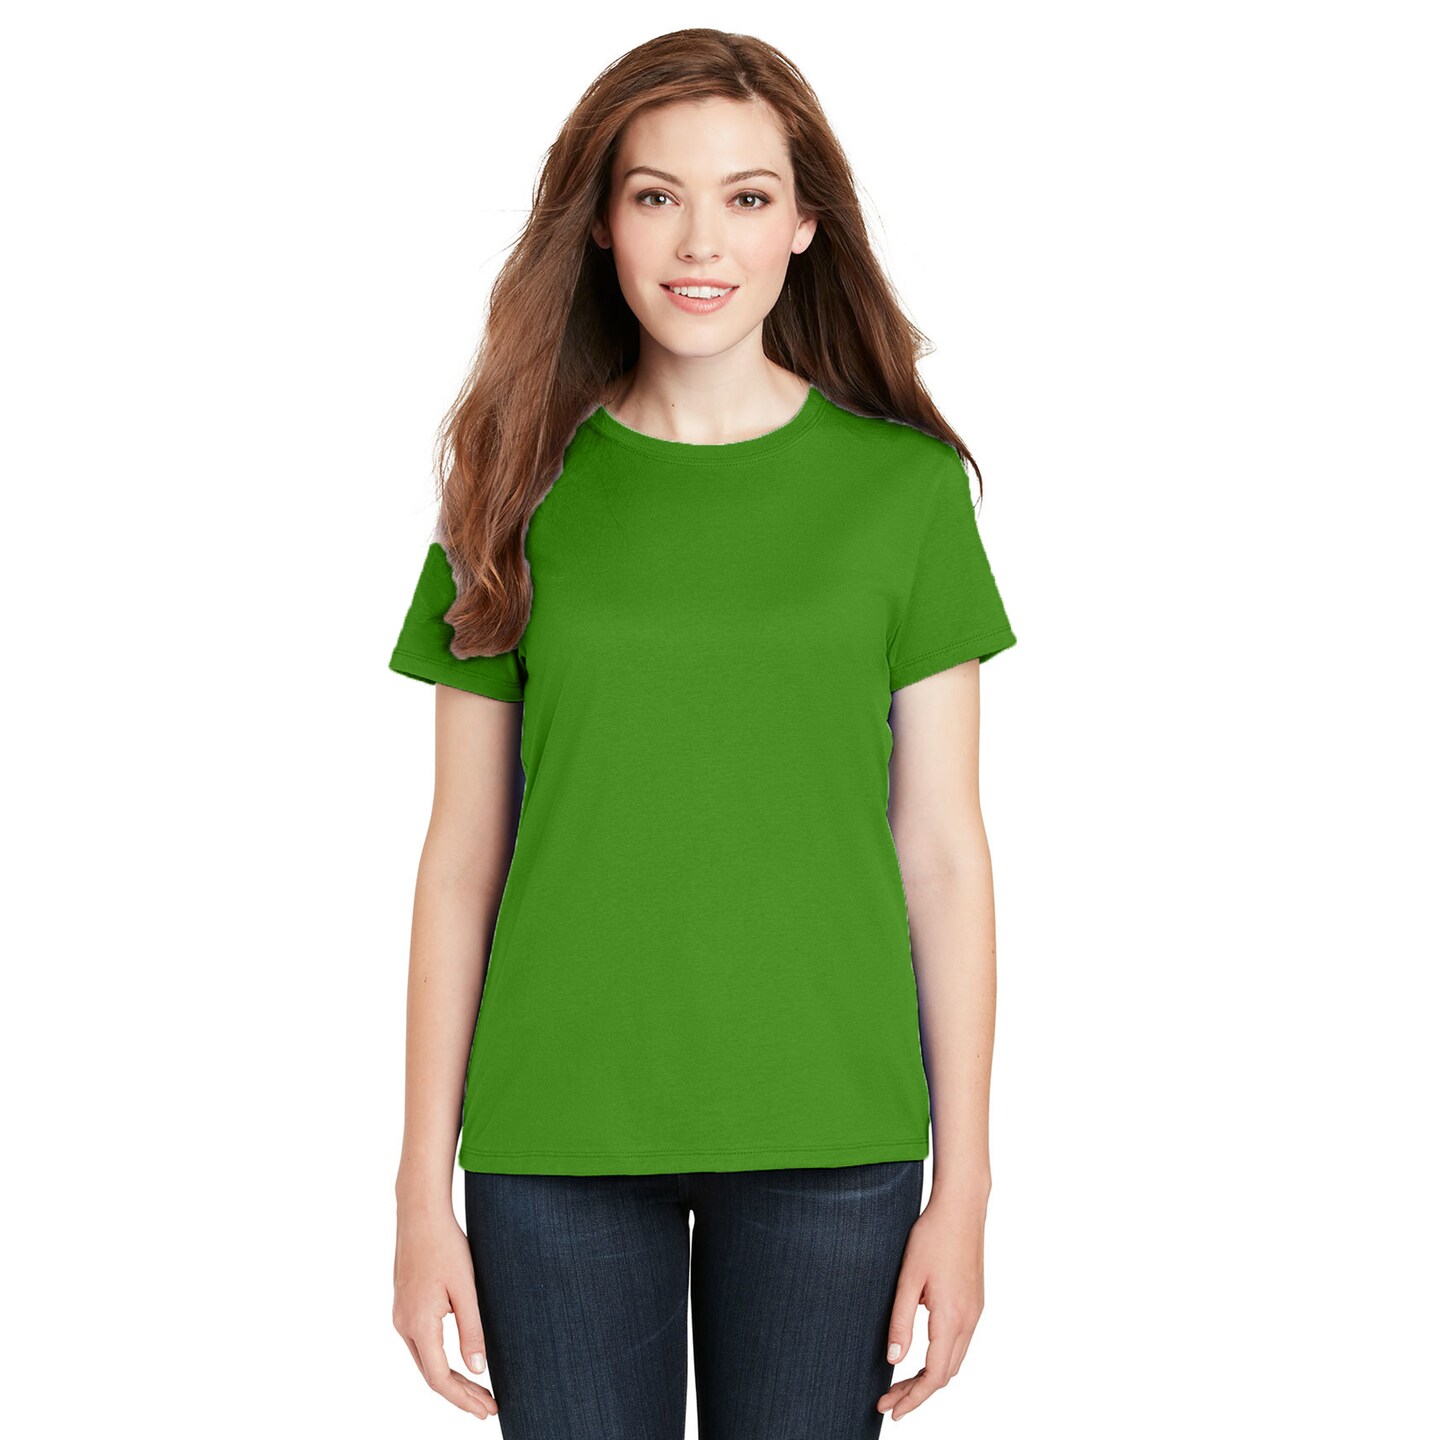 Our Premium Women's Cotton T-Shirt -Oversize- is comfortable, stylish ...